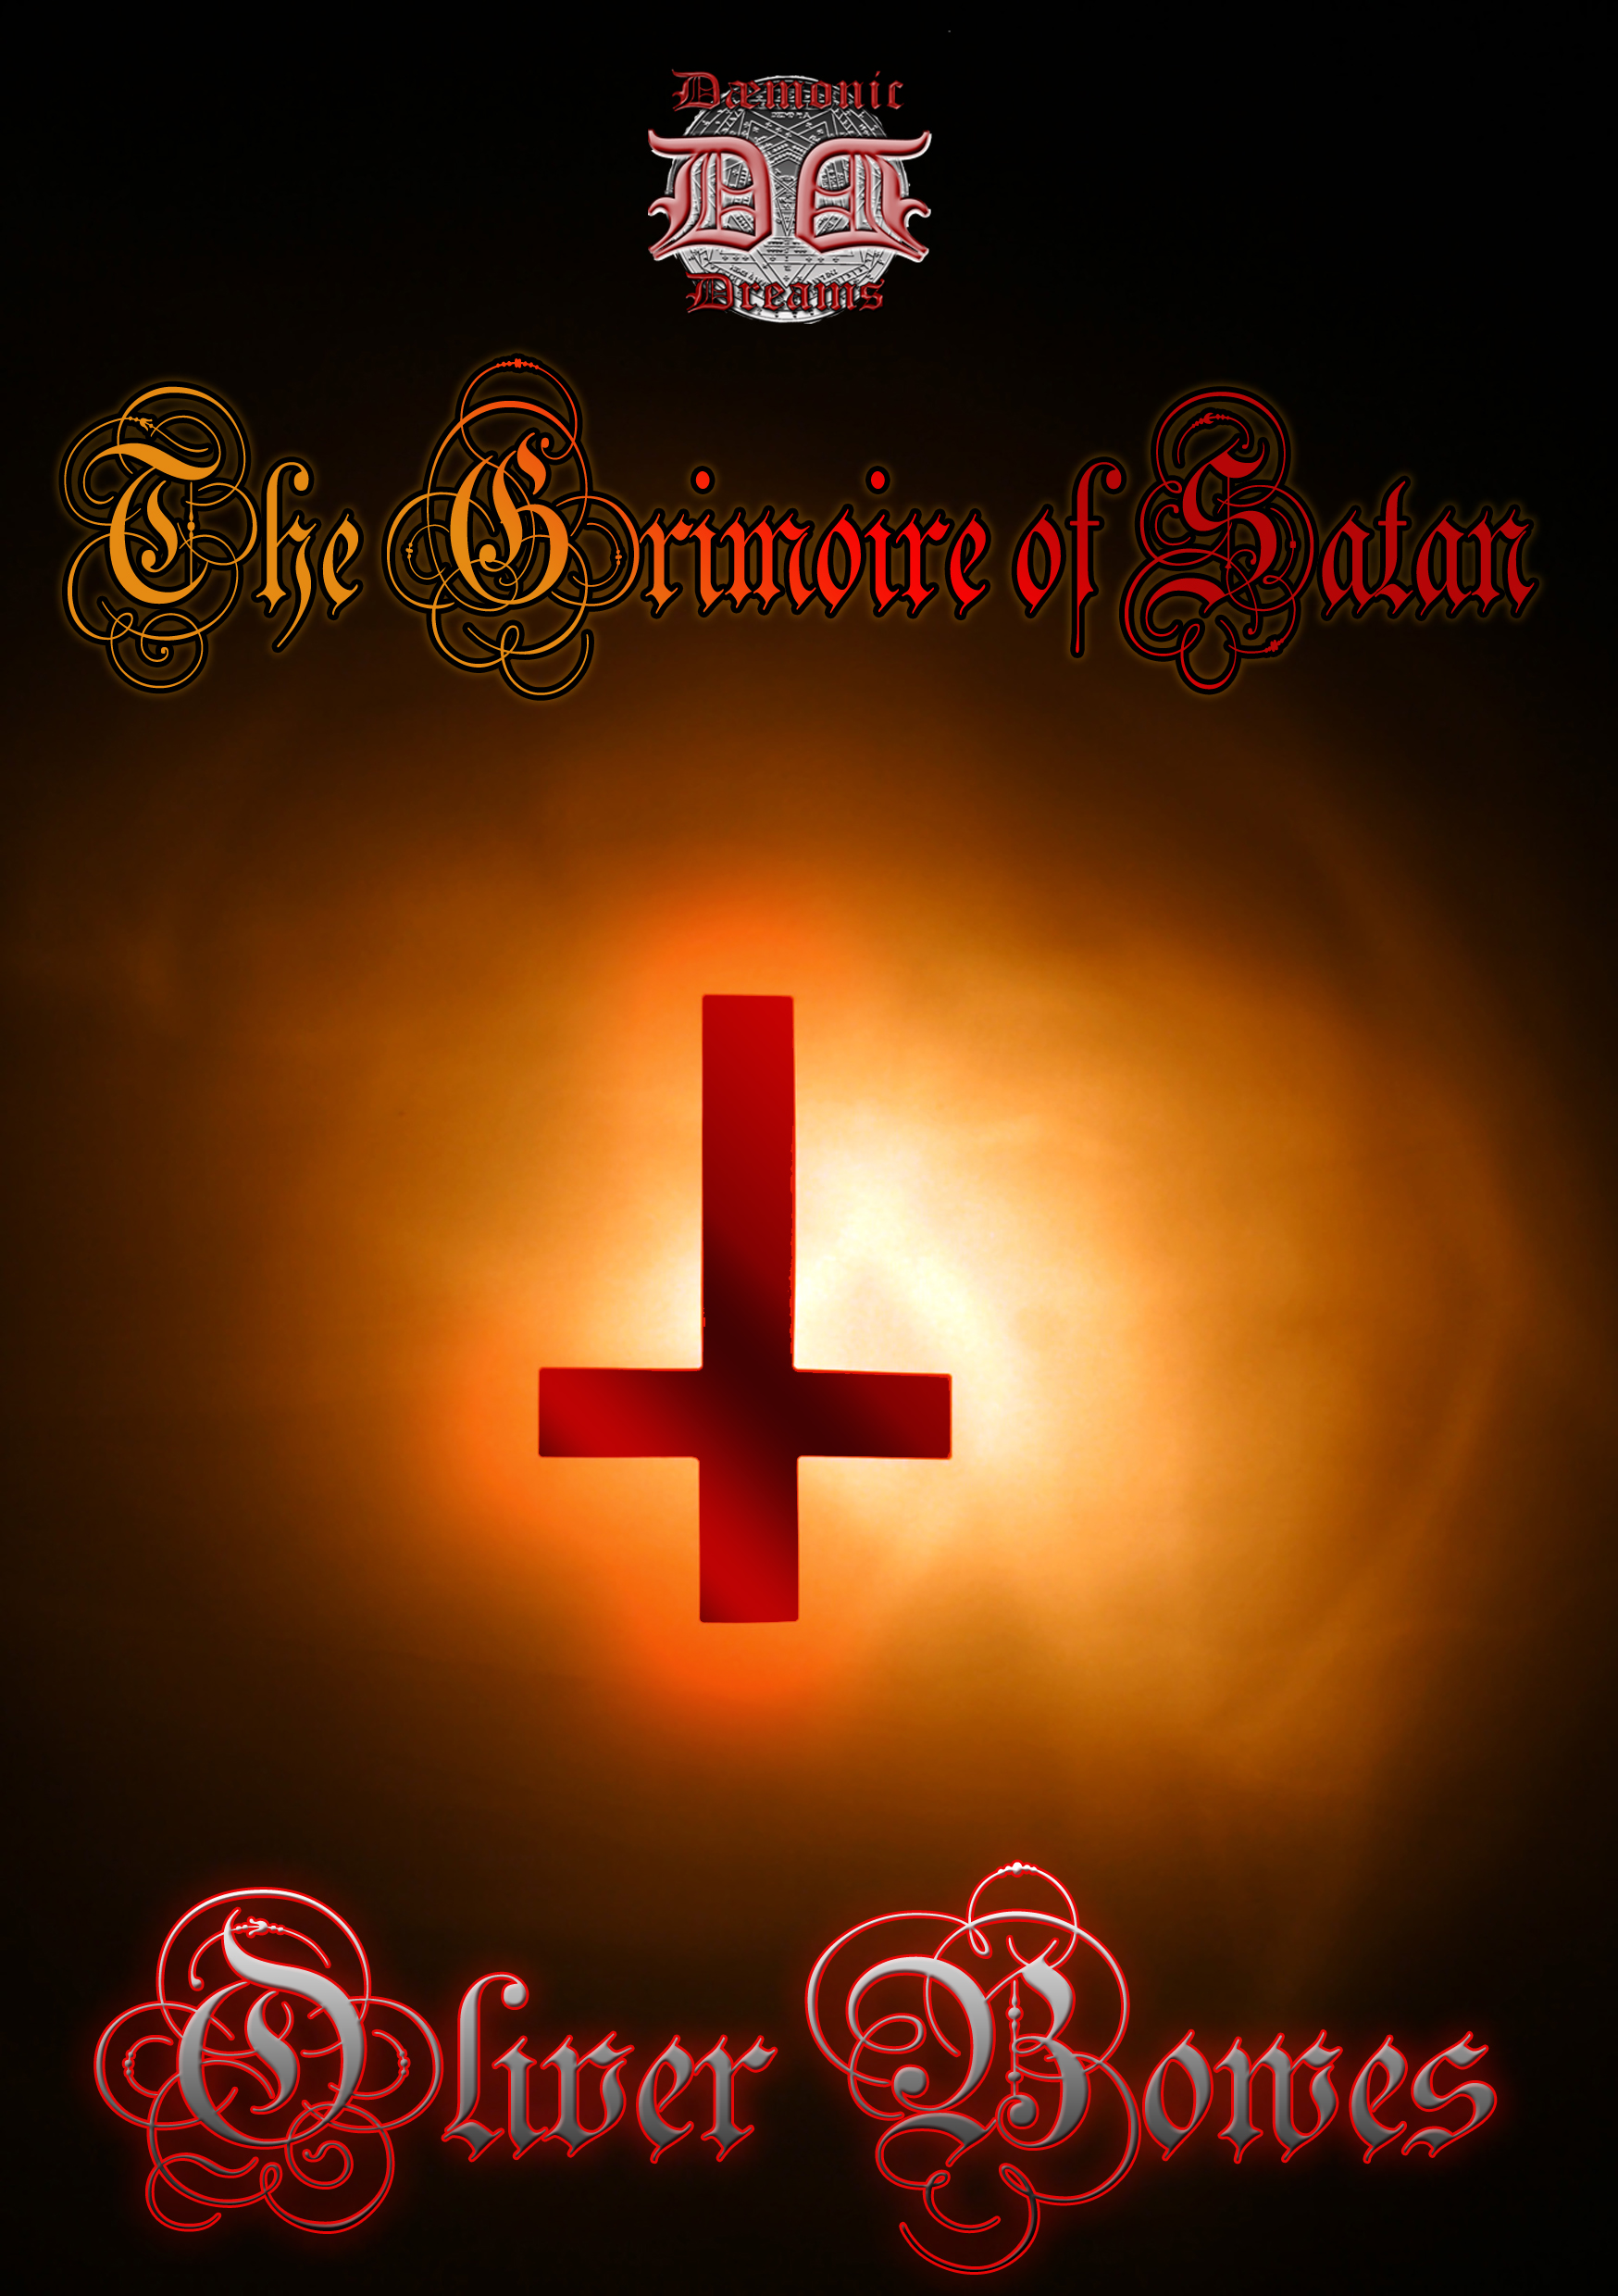 THE GRIMOIRE OF SATAN Oliver Bowes Finbarr Occult Grimoire Magic Magick Satanism 